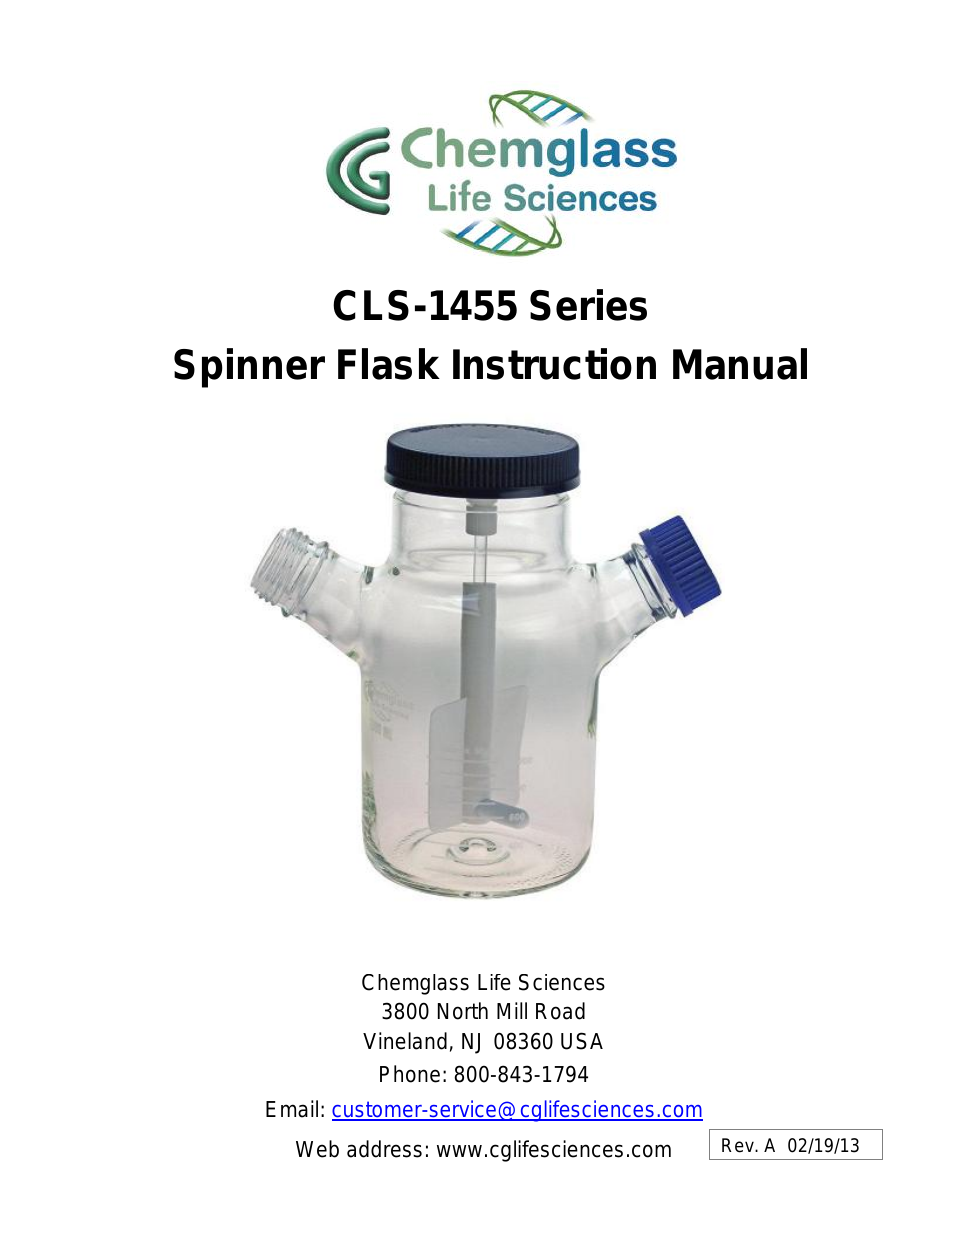 CLS-1455 Series Spinner Flasks